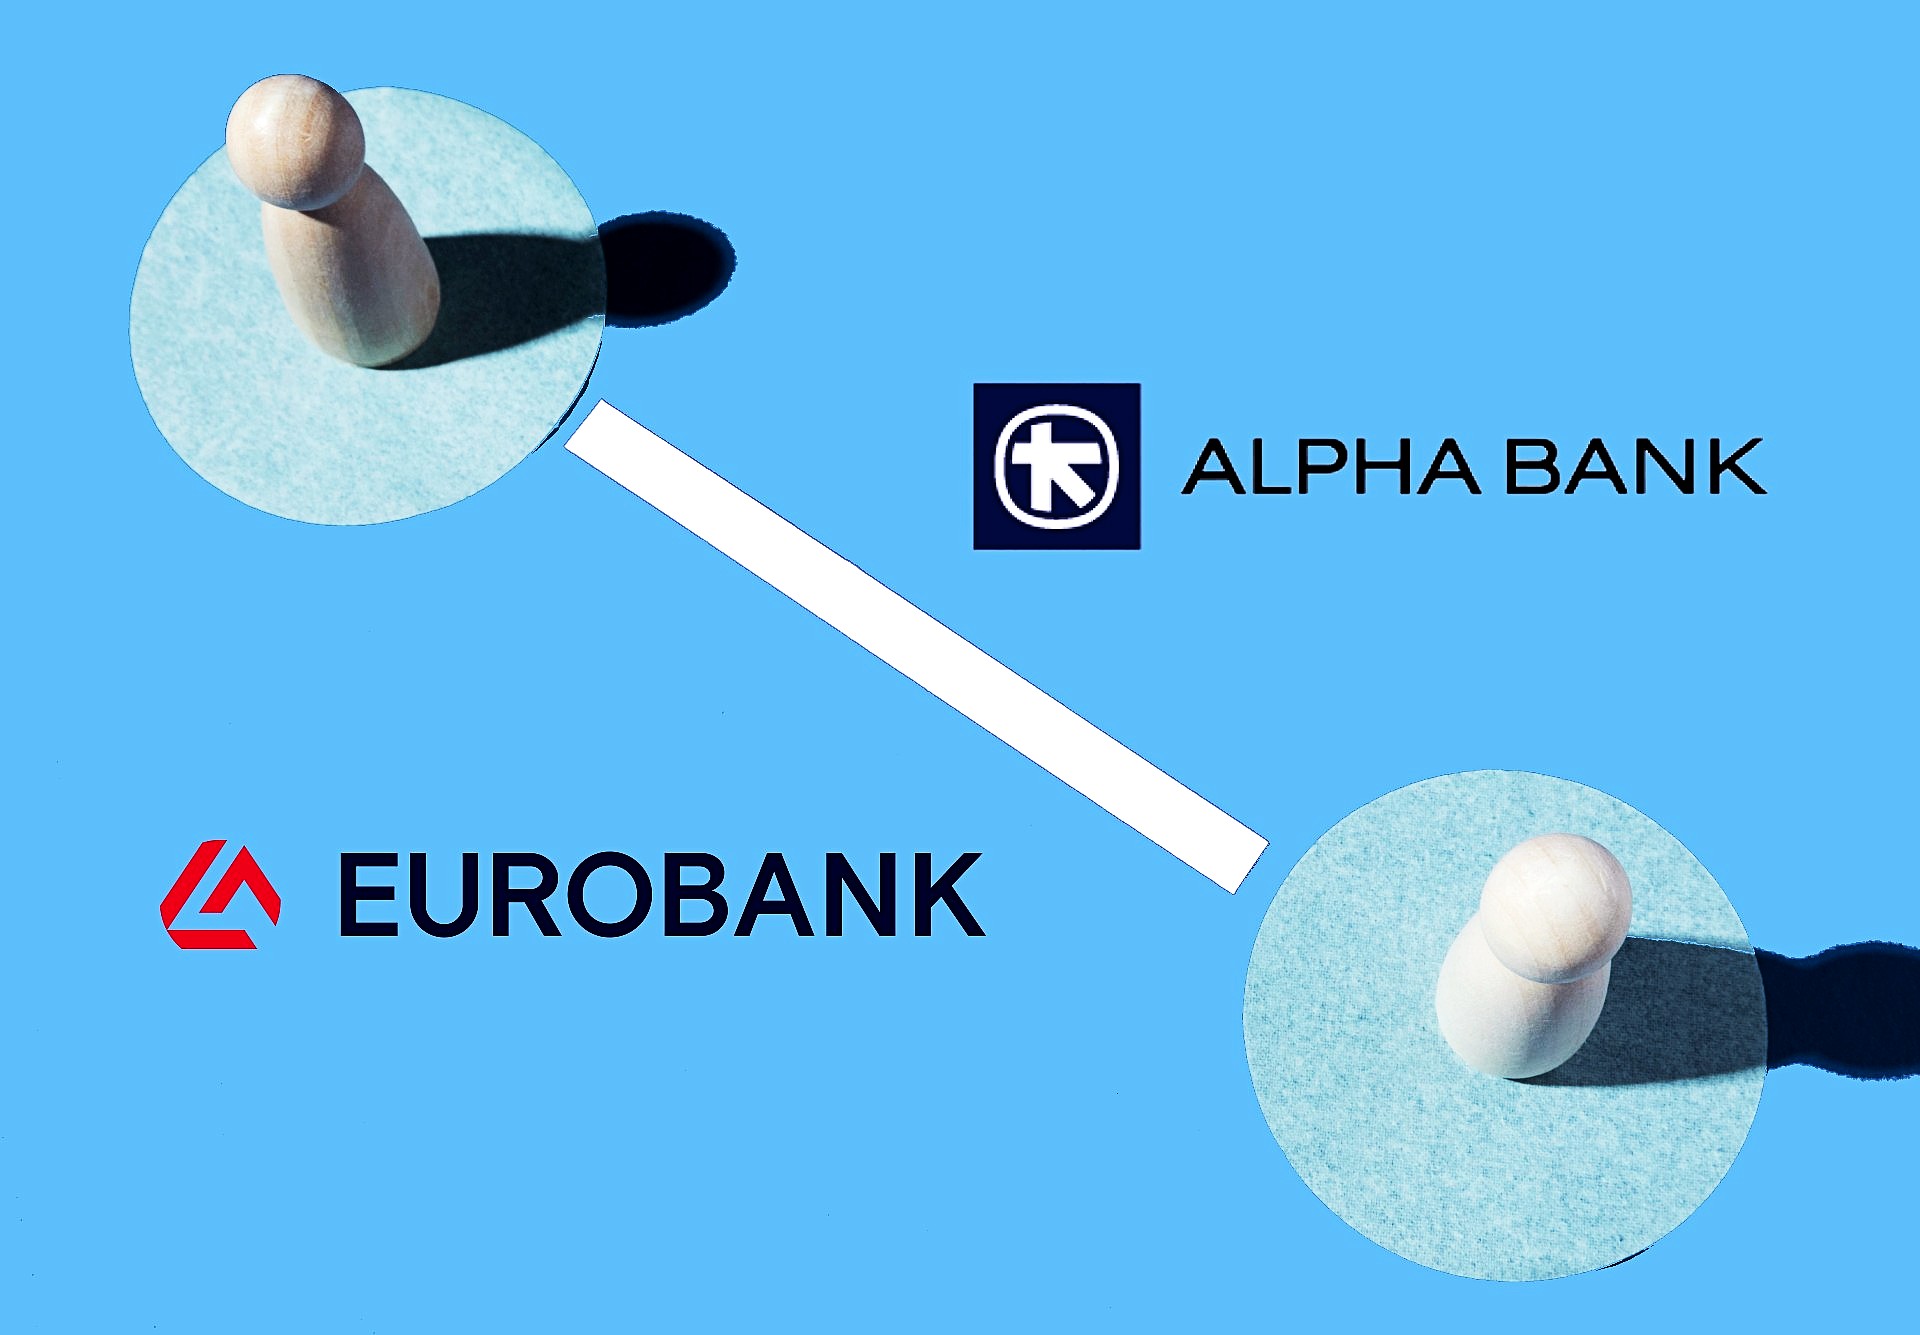 Alpha Bank – Eurobank: Μικτό μοντέλο ανταμοιβής των μετόχων με μετρητά αλλά και με buyback - 1,1 δισ. ευρώ την 3ετία 2024-2026 ανακοίνωσε ο CEO της Alpha Bank, Βασίλης Ψάλτης - Κλιμακωτή αύξηση στα μερίσματα προανήγγειλε ο CEO της Eurobank, Φωκίων Καραβίας!